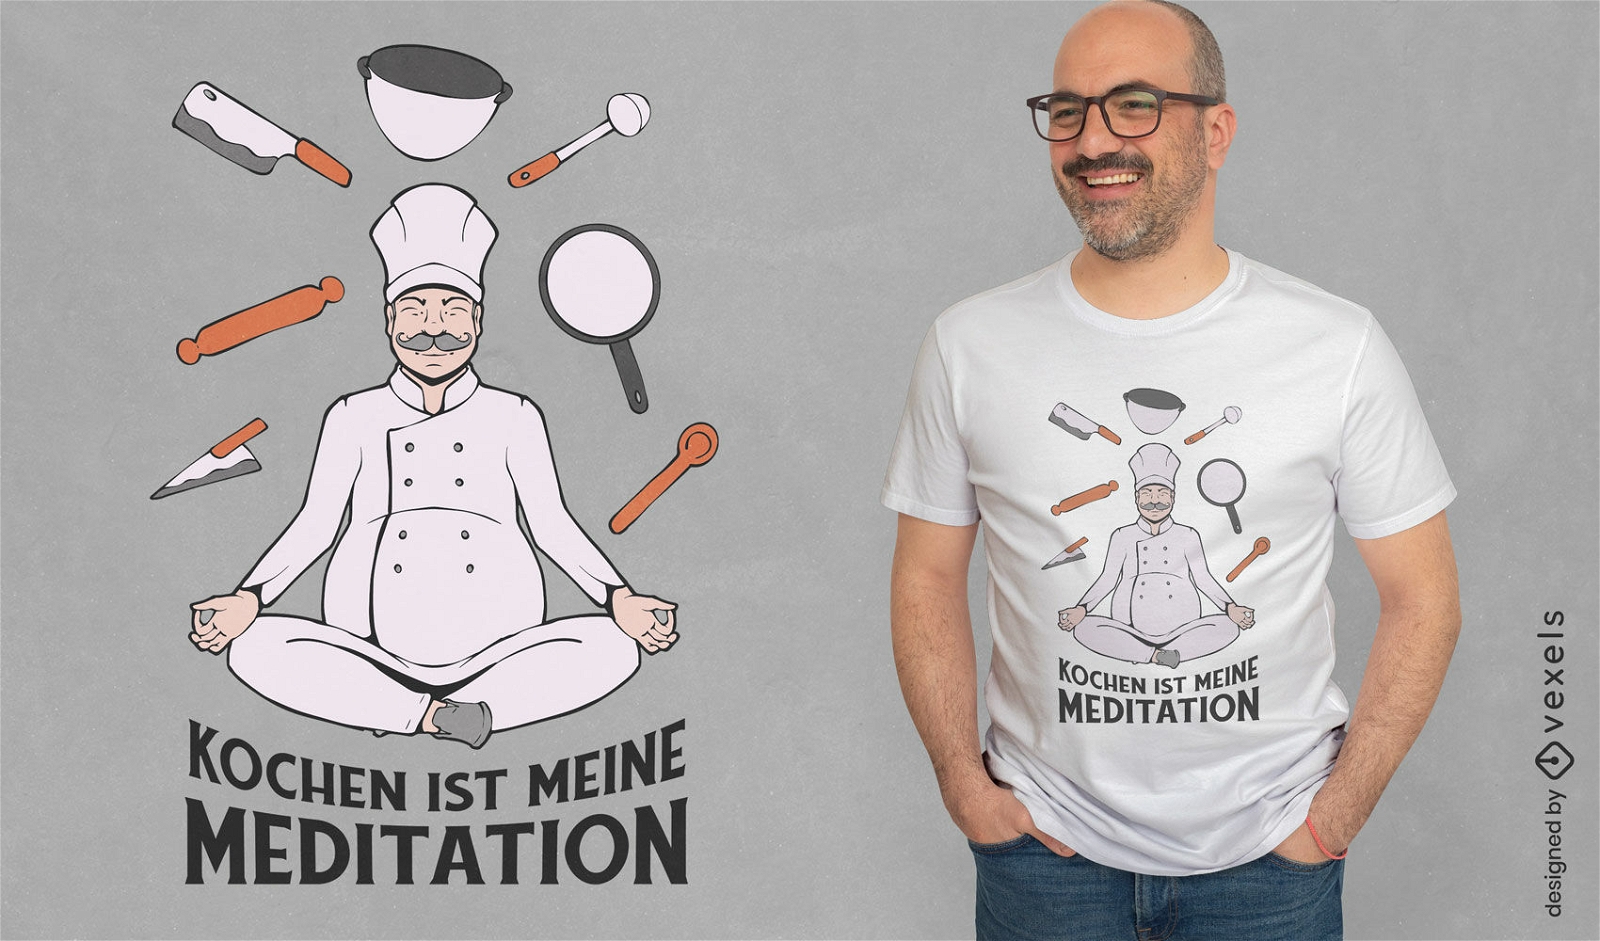 Chef cooking meditation t-shirt design